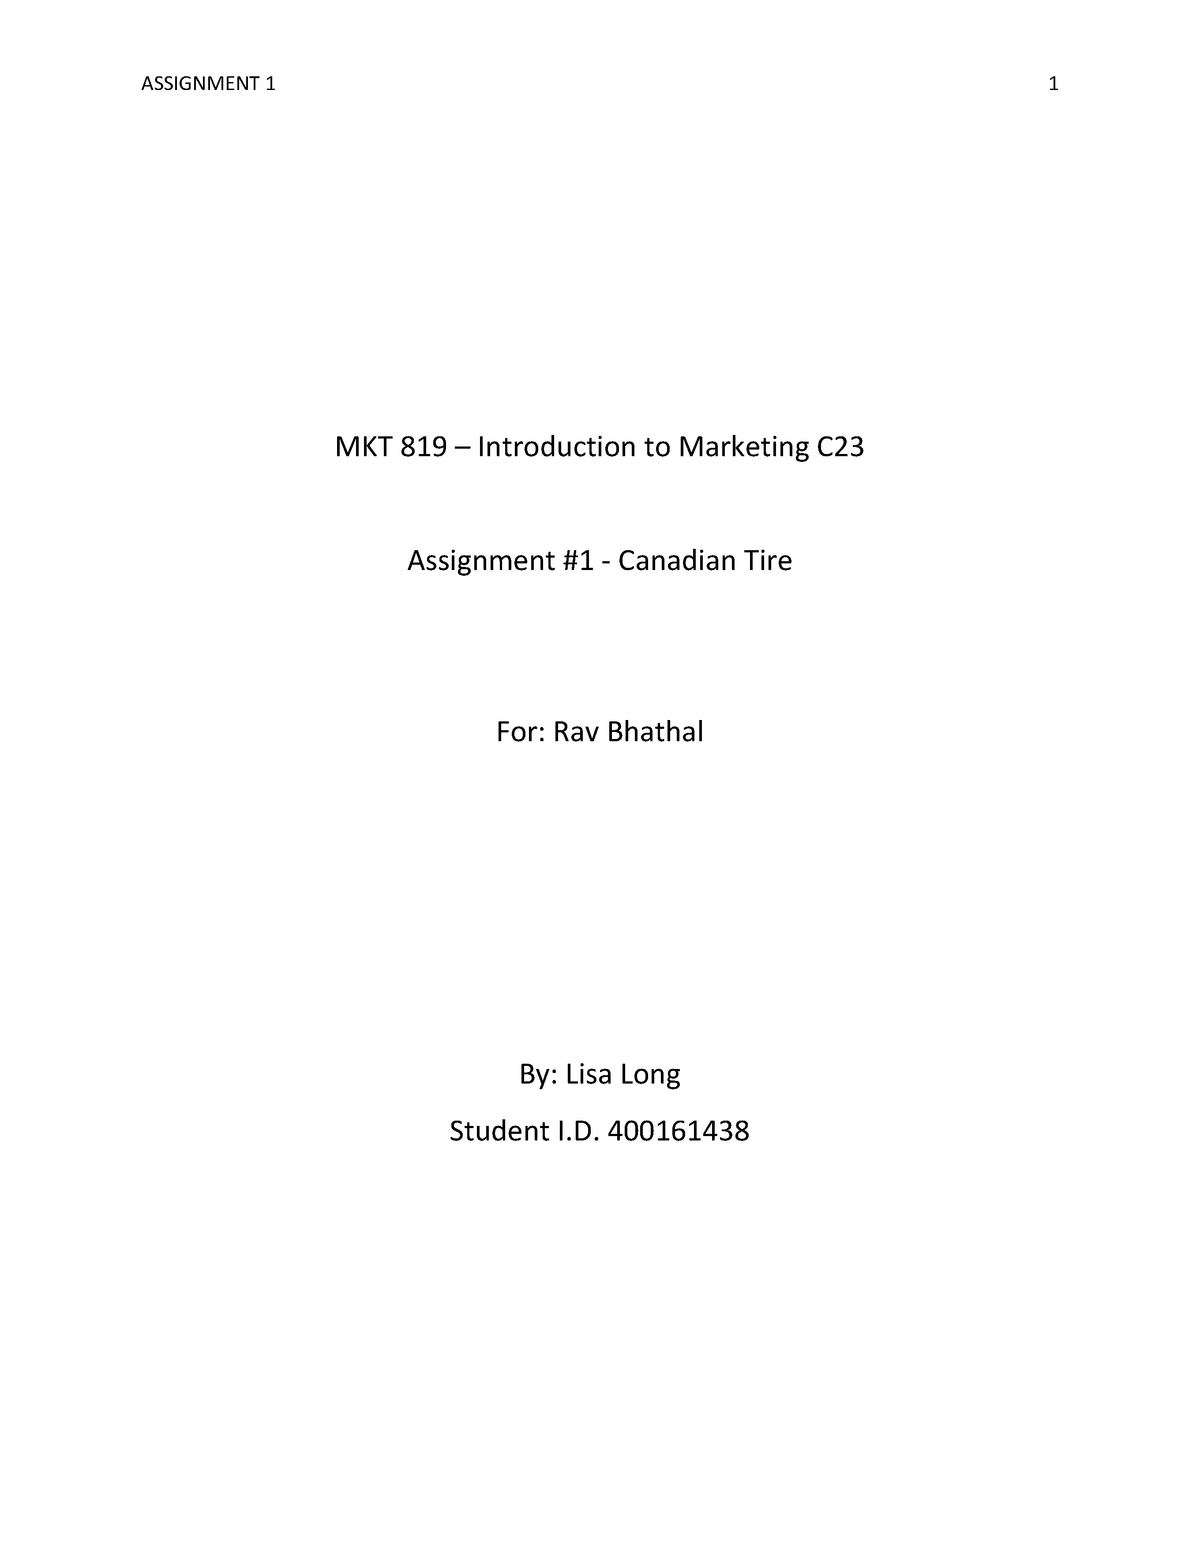 Canadian Tire Corporation Case Study